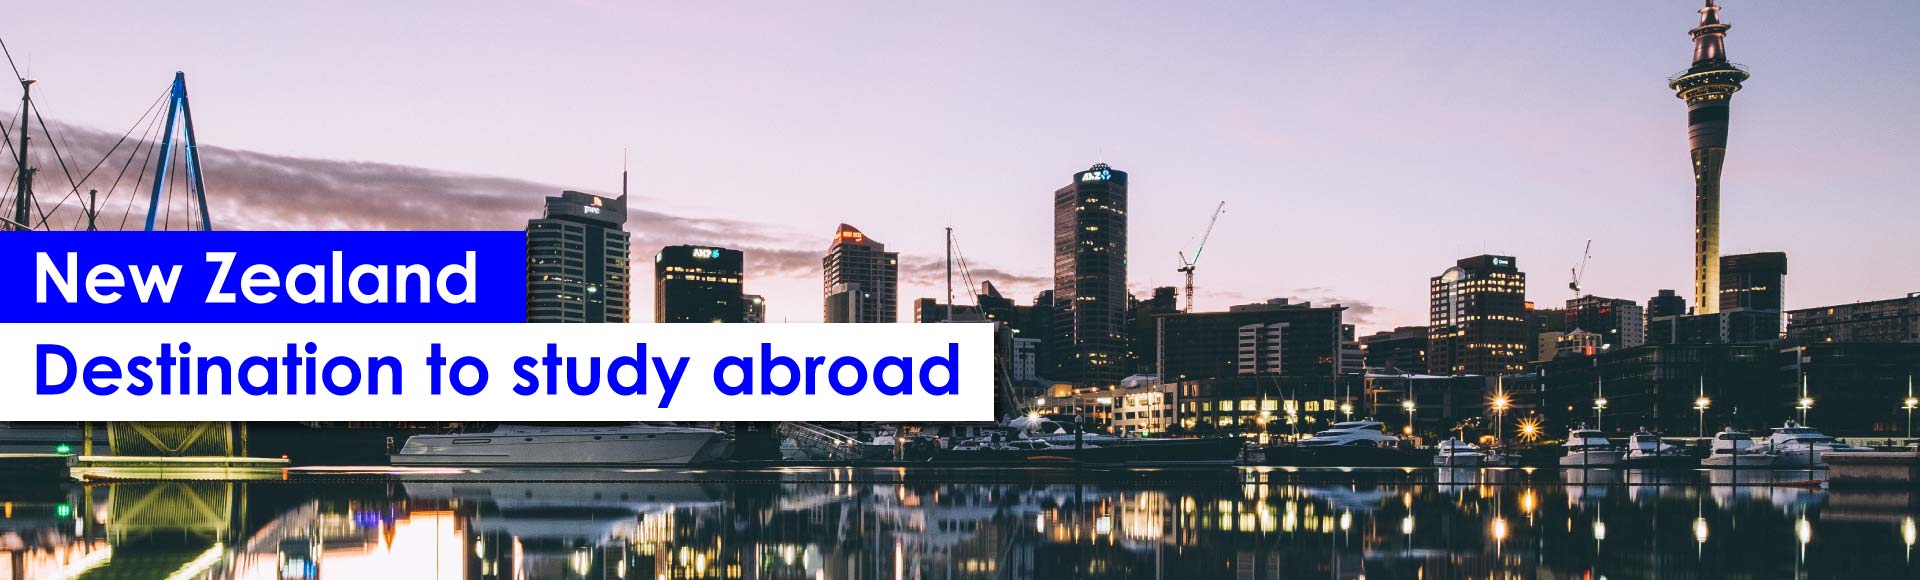 New Zealand- Destination to study abroad